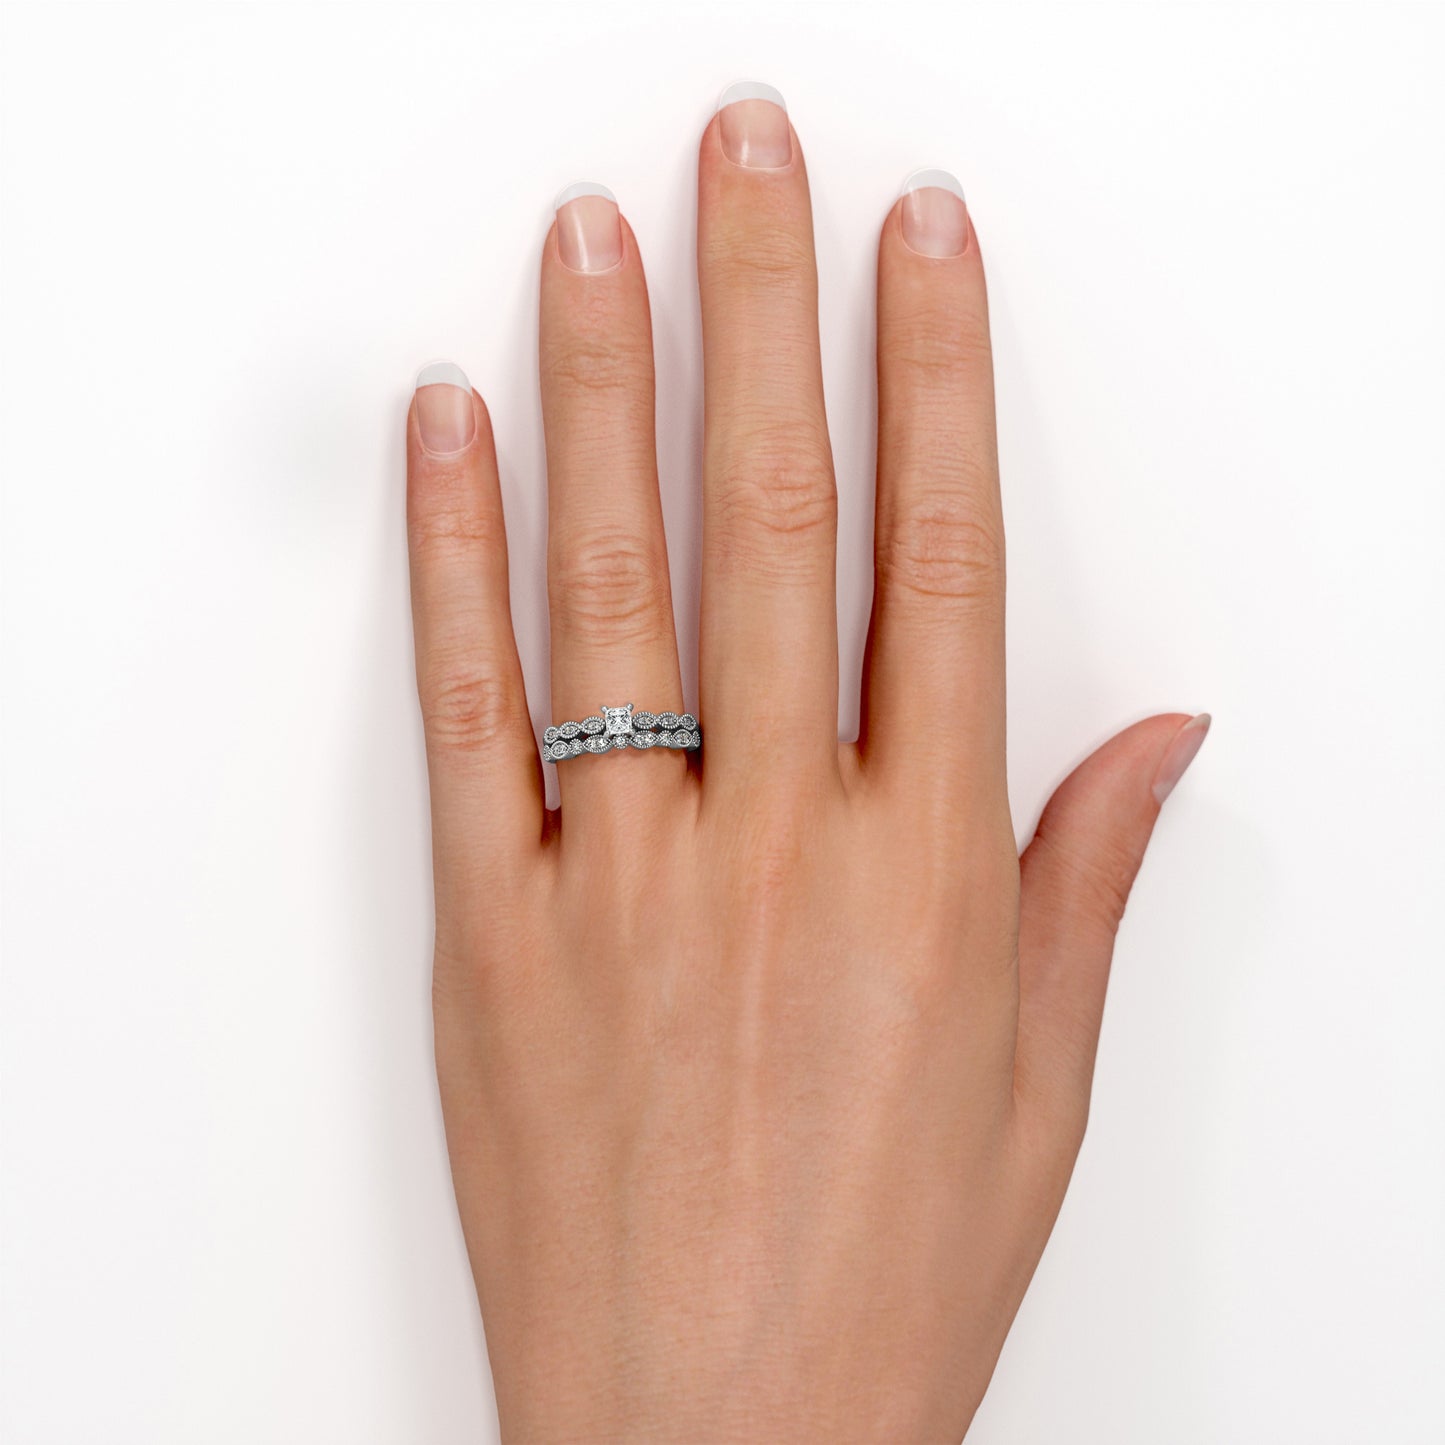 Exquisite vintage 0.5 carat Princess cut diamond scalloped milgrain wedding ring set for women in gold